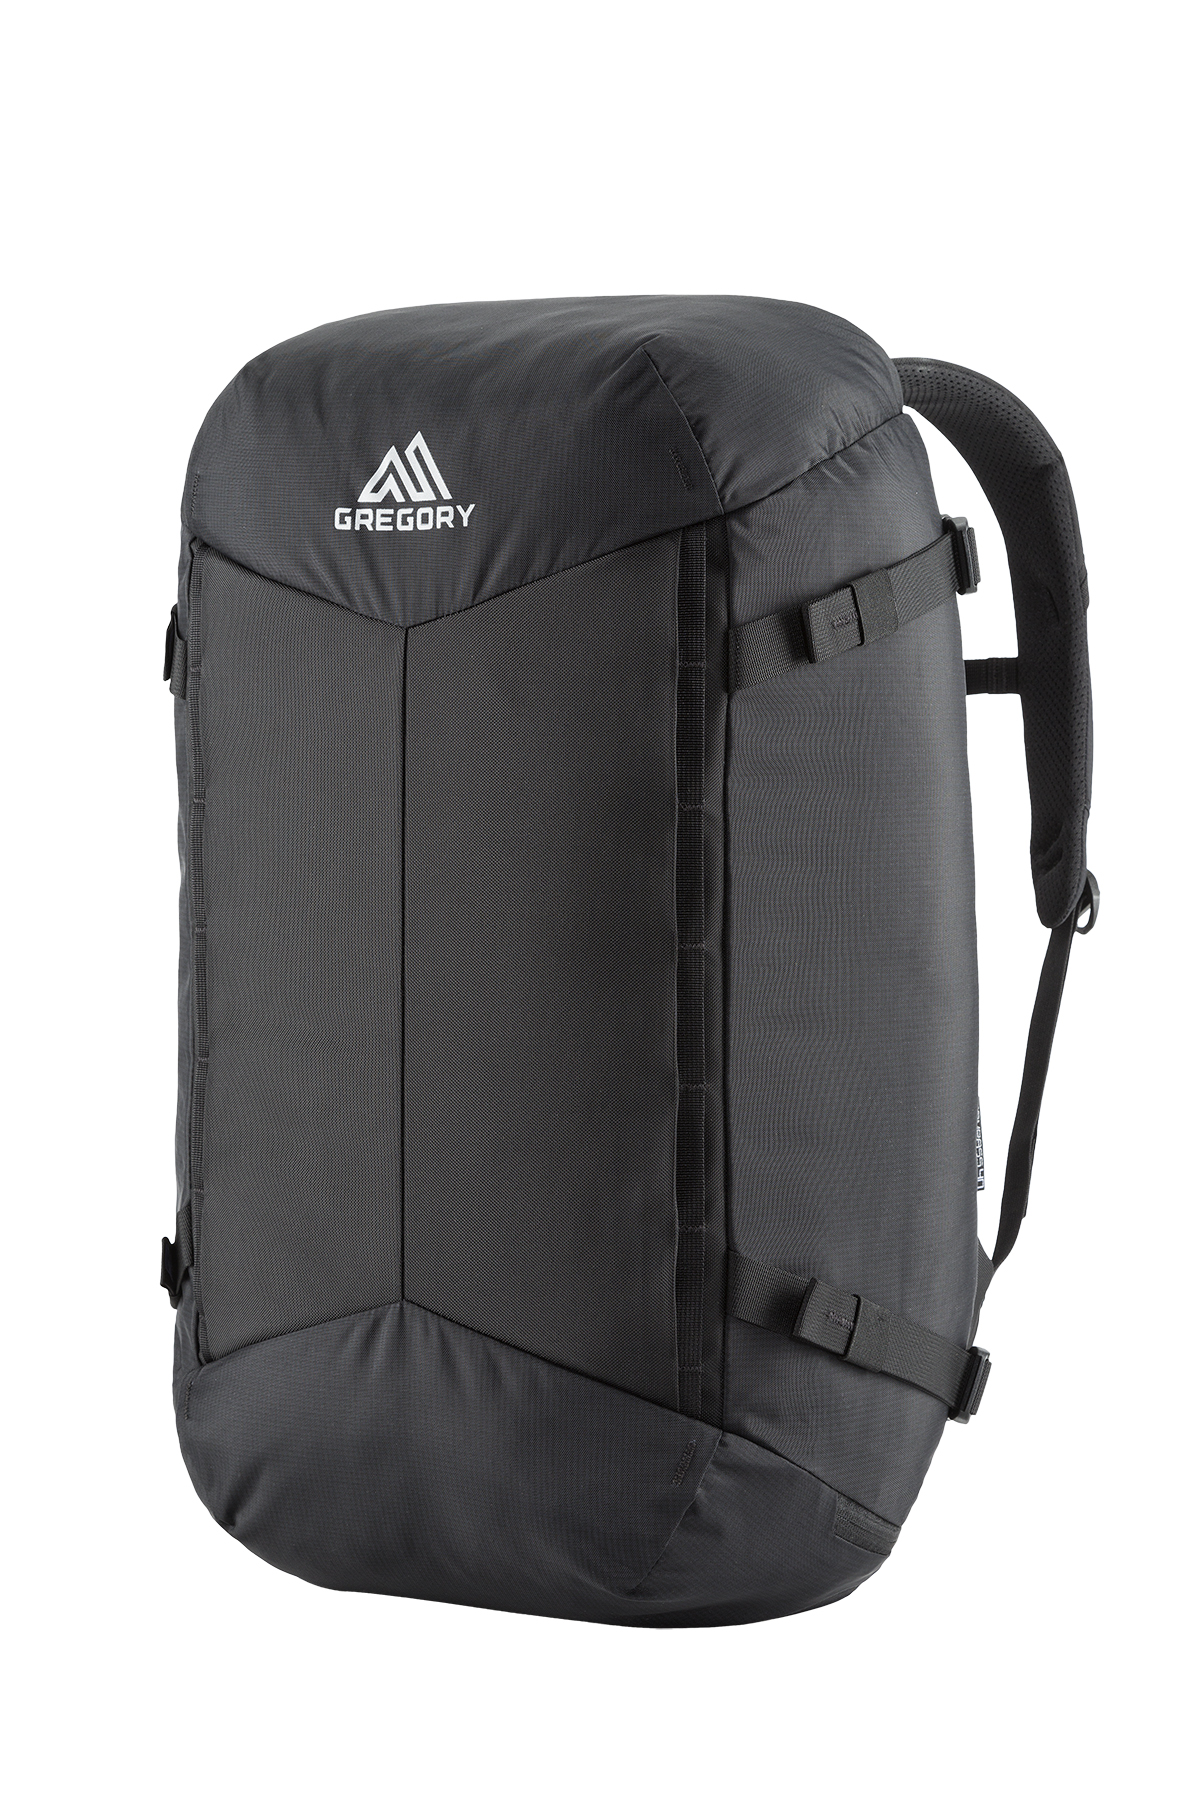 gregory backpack 40